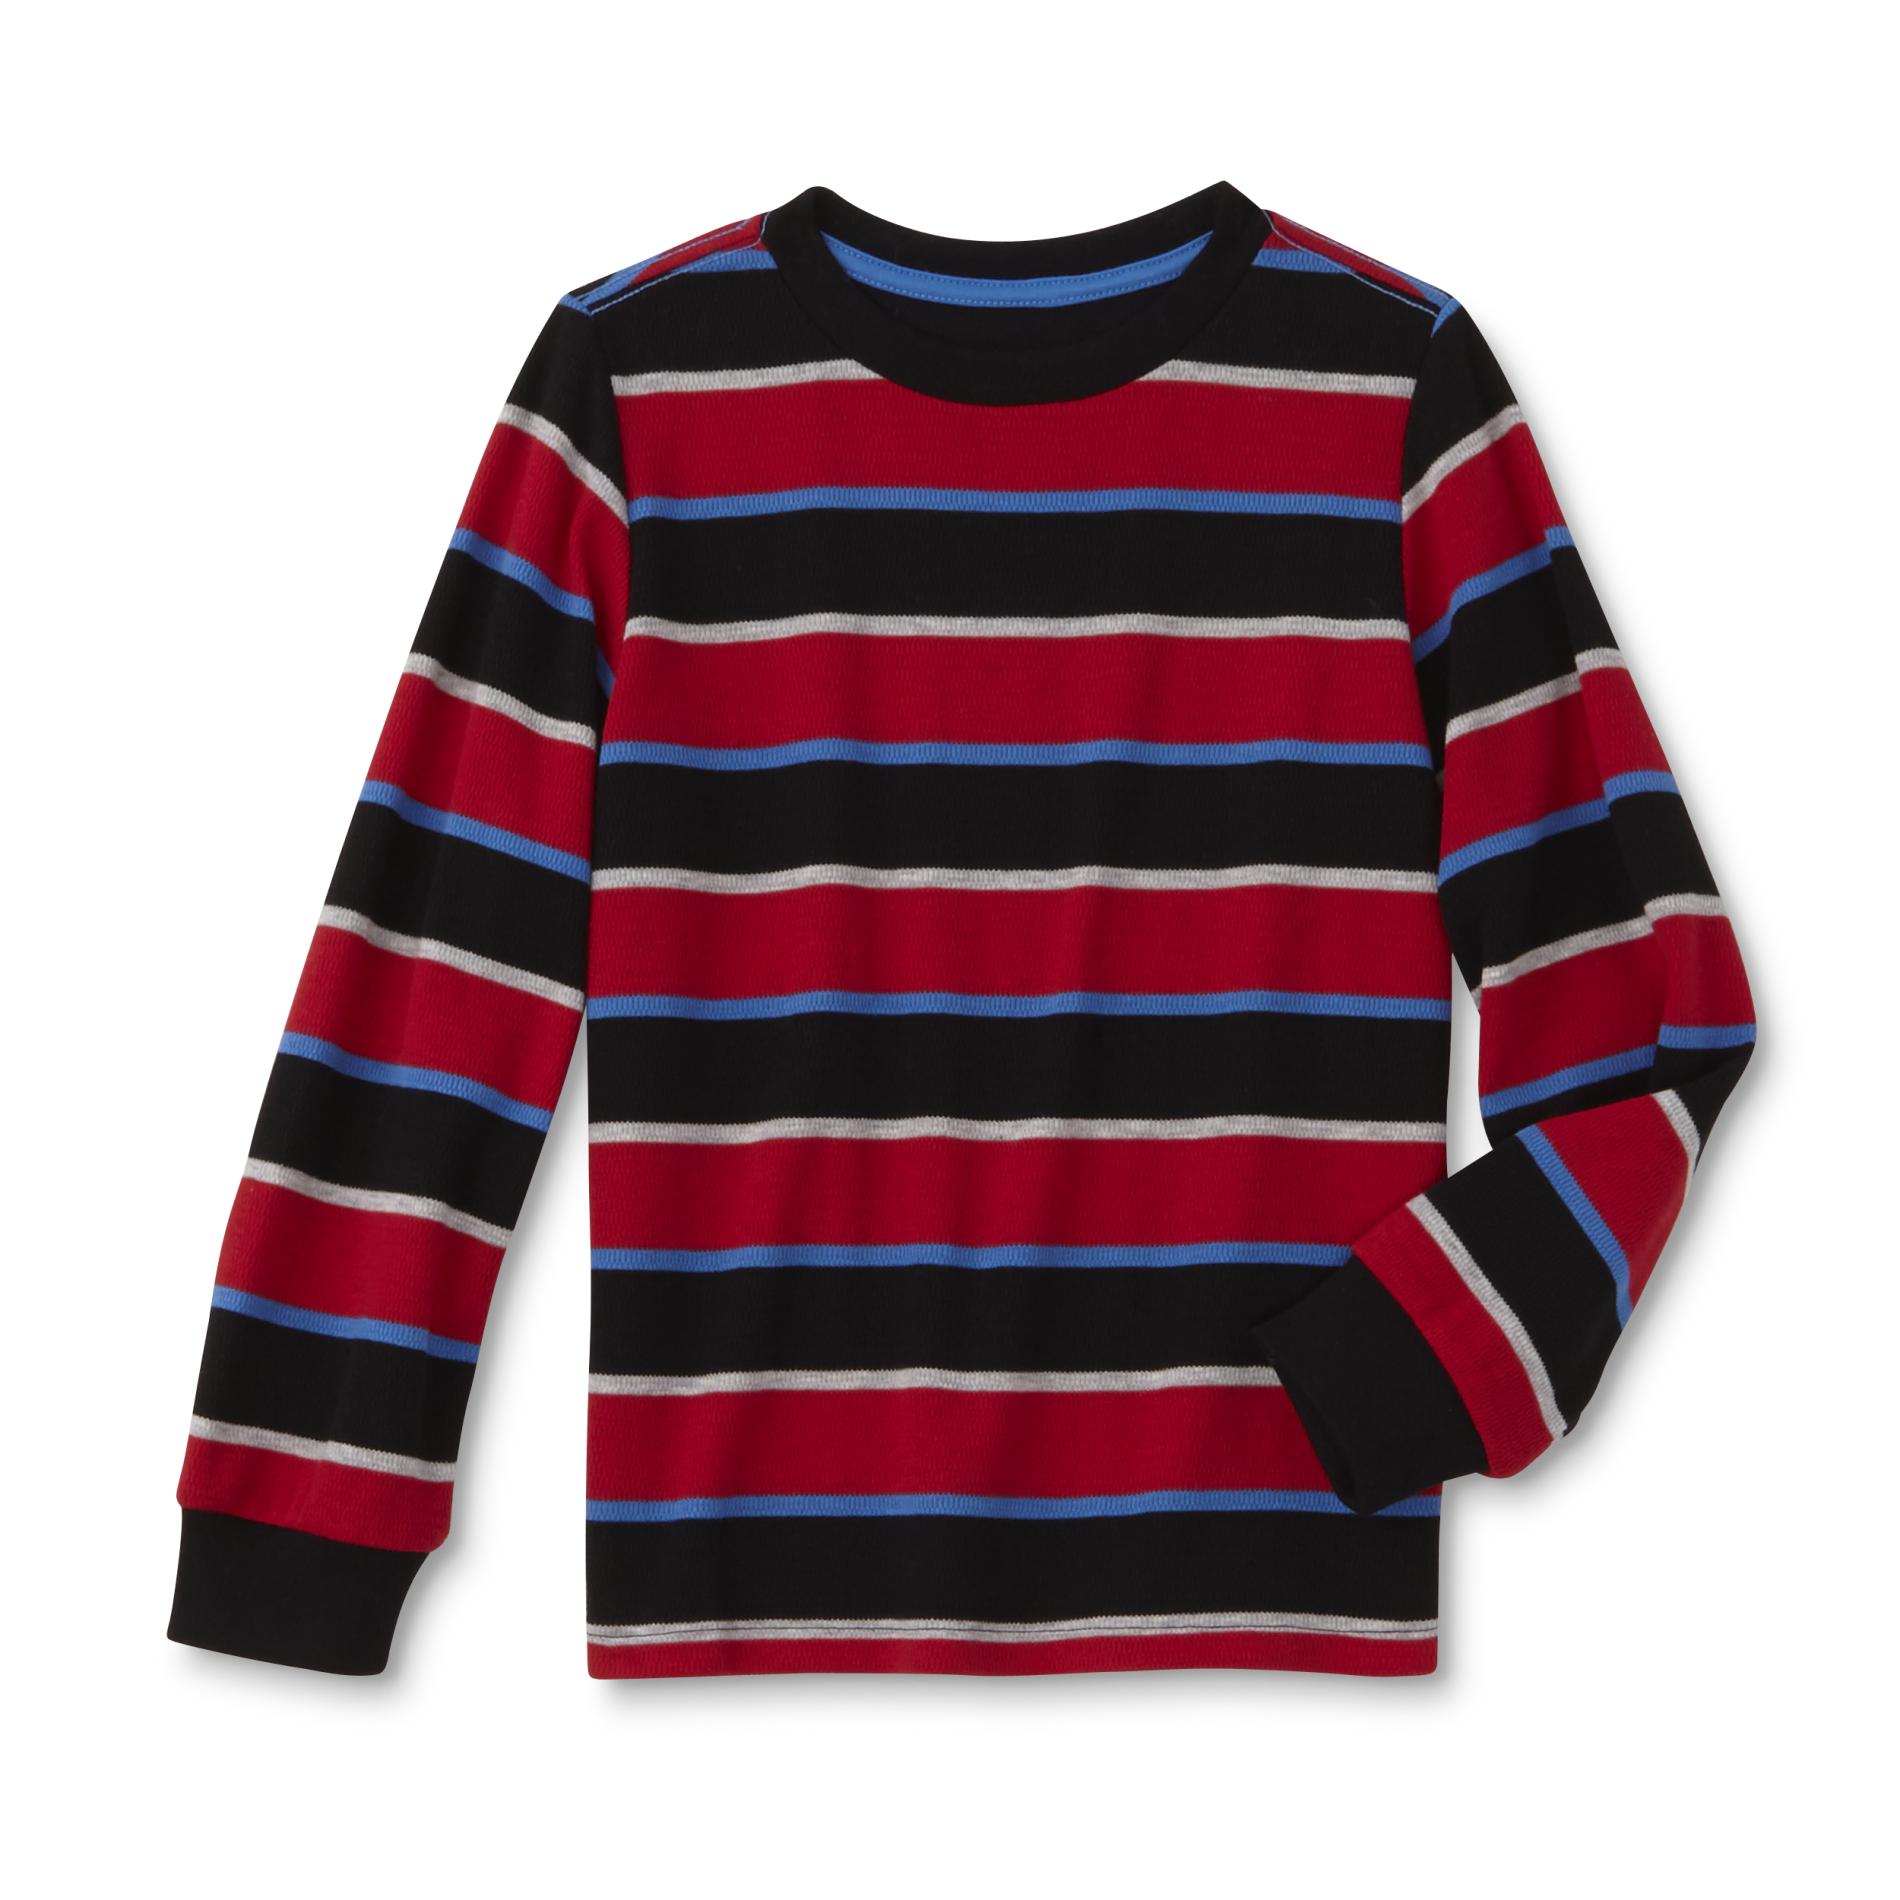 Toughskins Infant & Toddler Boys' Thermal Shirt - Striped